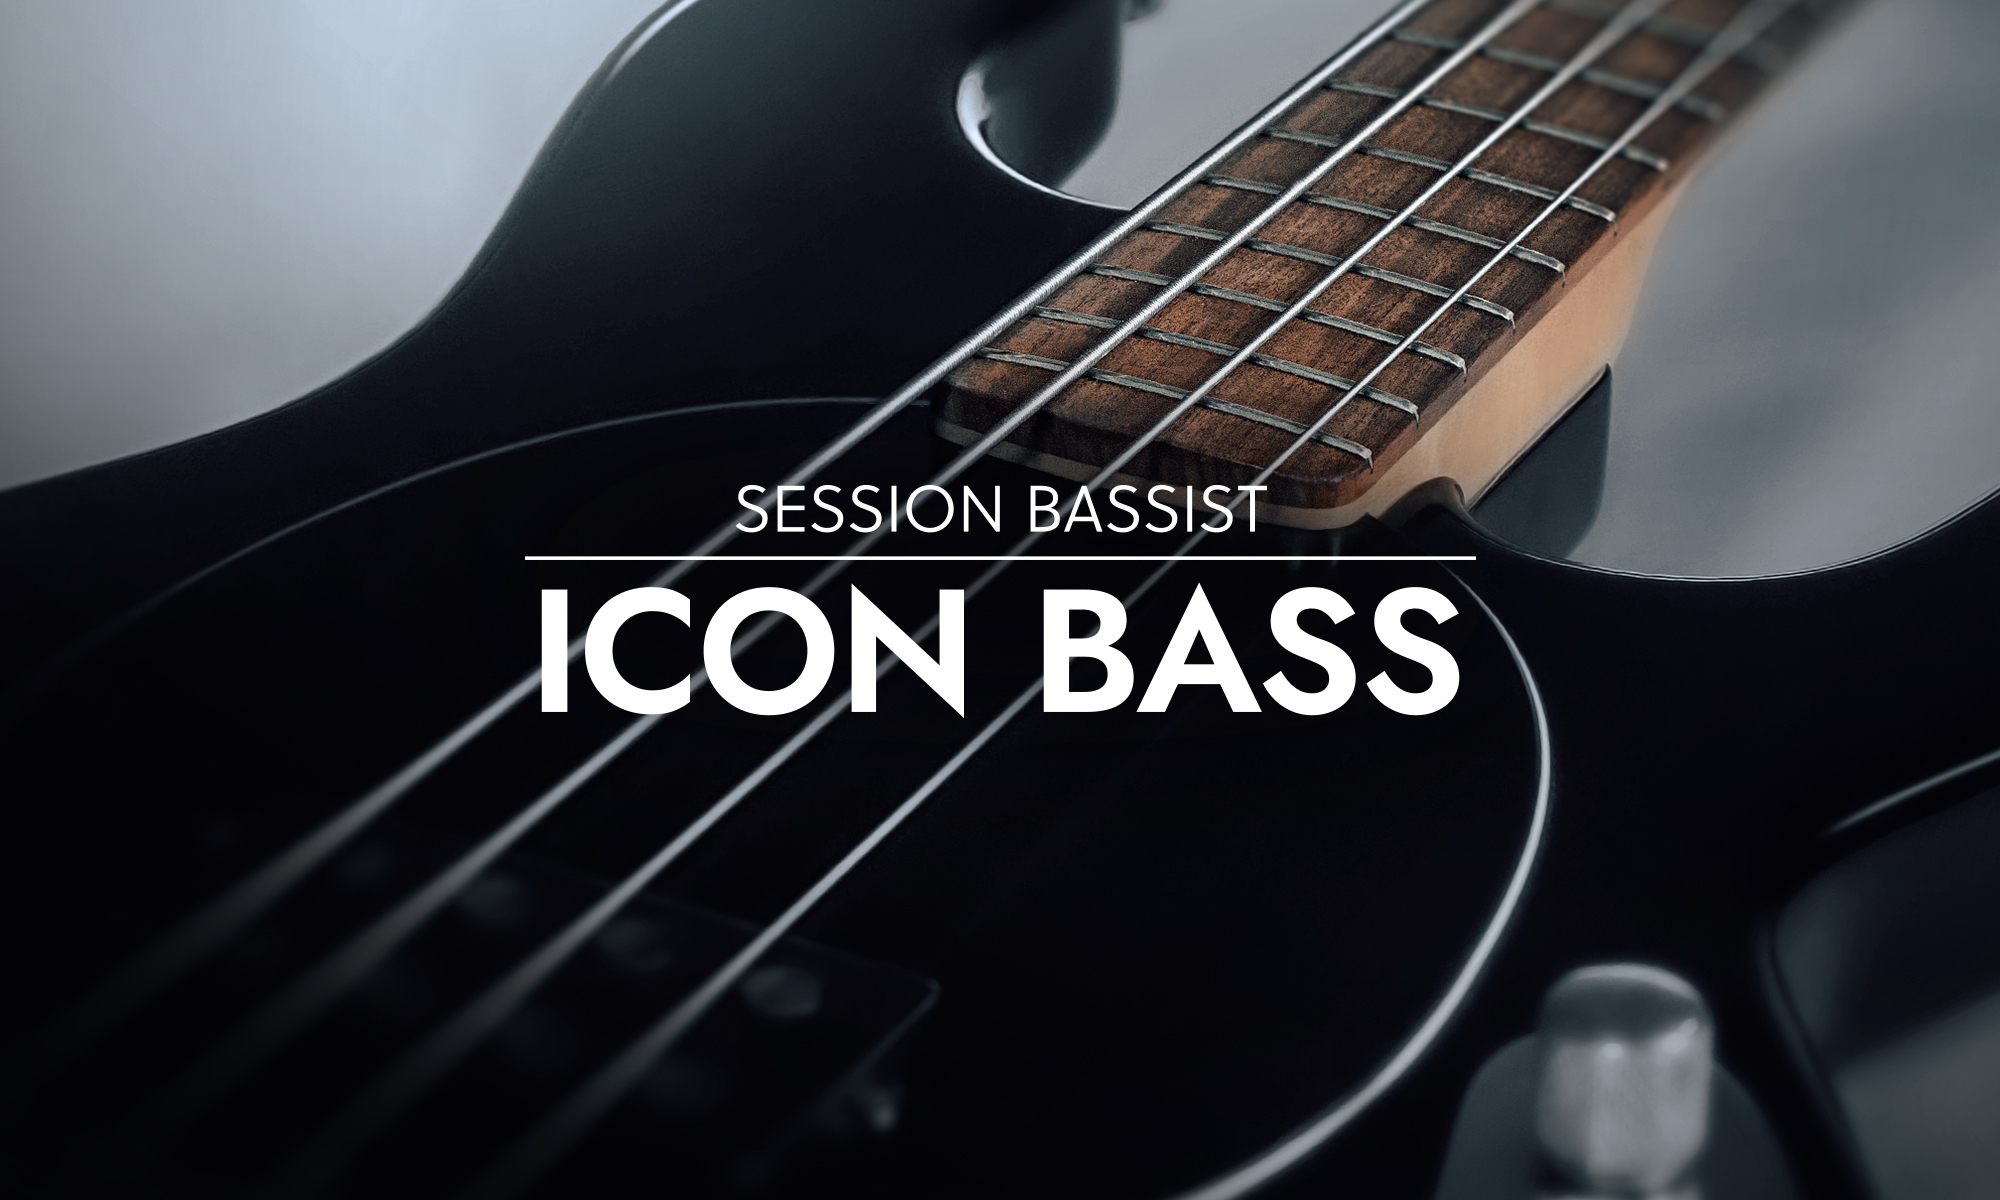 Session-Bassist-Icon-Bass-manual-web-2000x1200.jpg